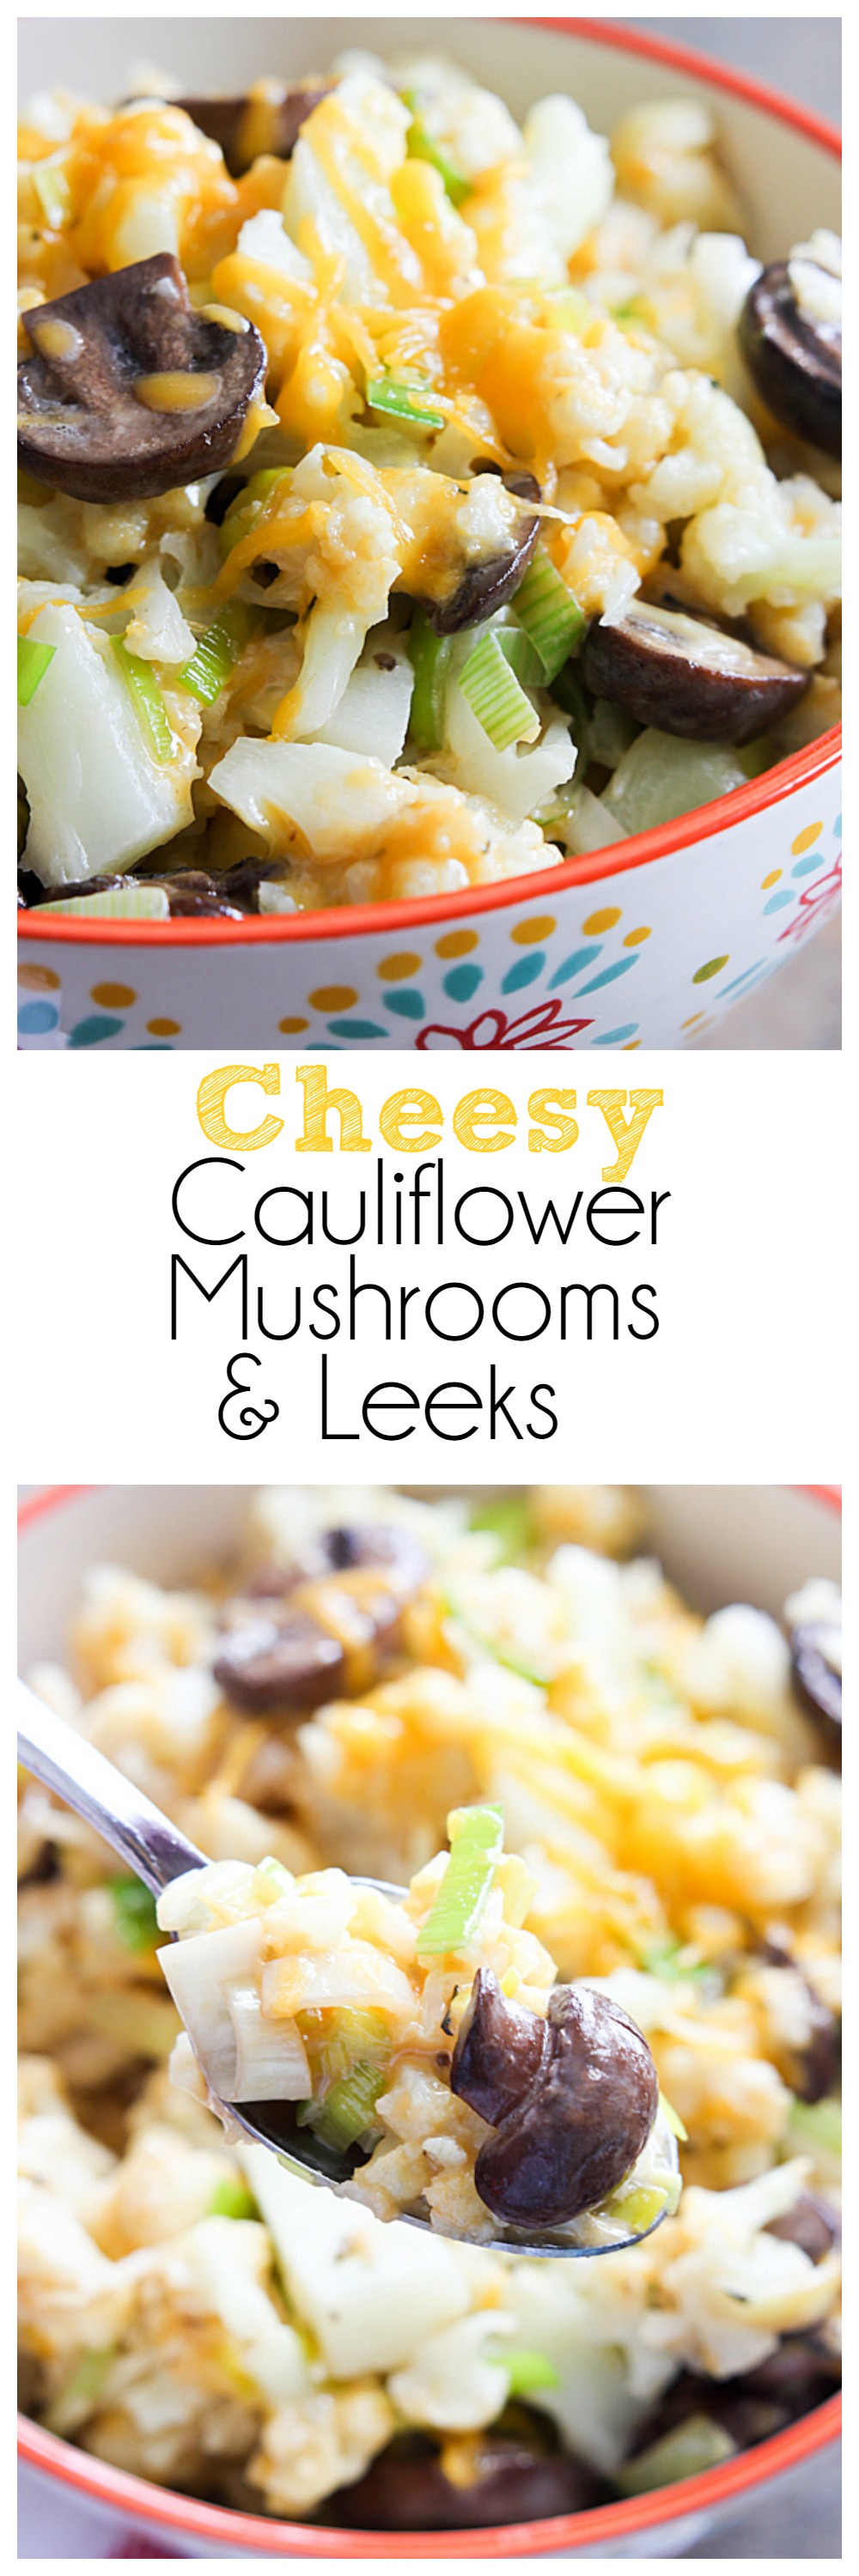 Cheesy Cauliflower Mushrooms and Leeks